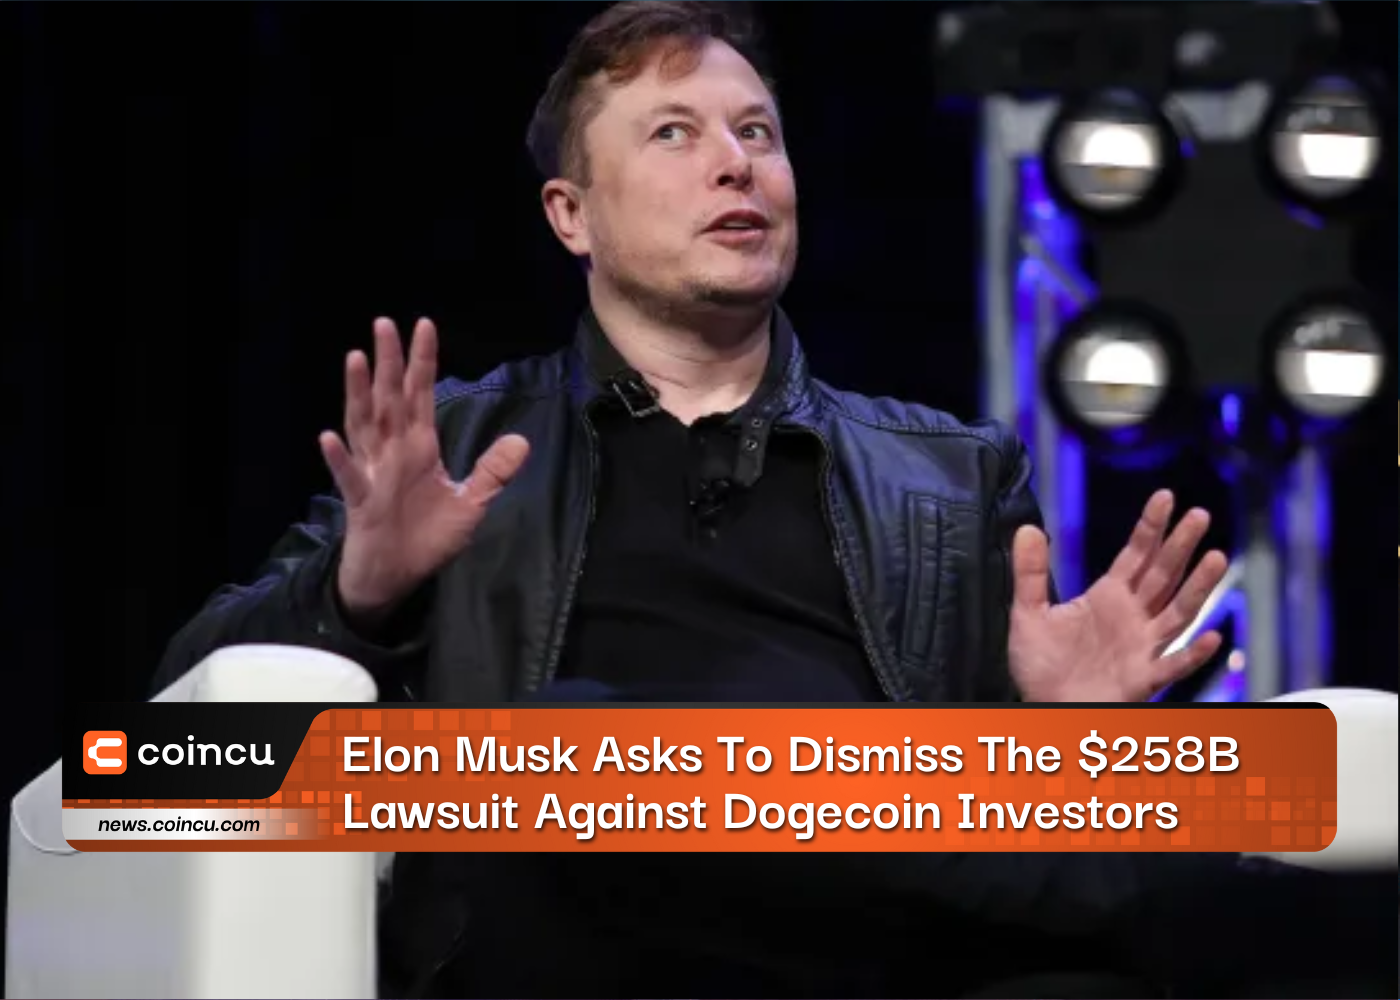 Elon Musk Asks To Dismiss The $258B Lawsuit Against Dogecoin Investors